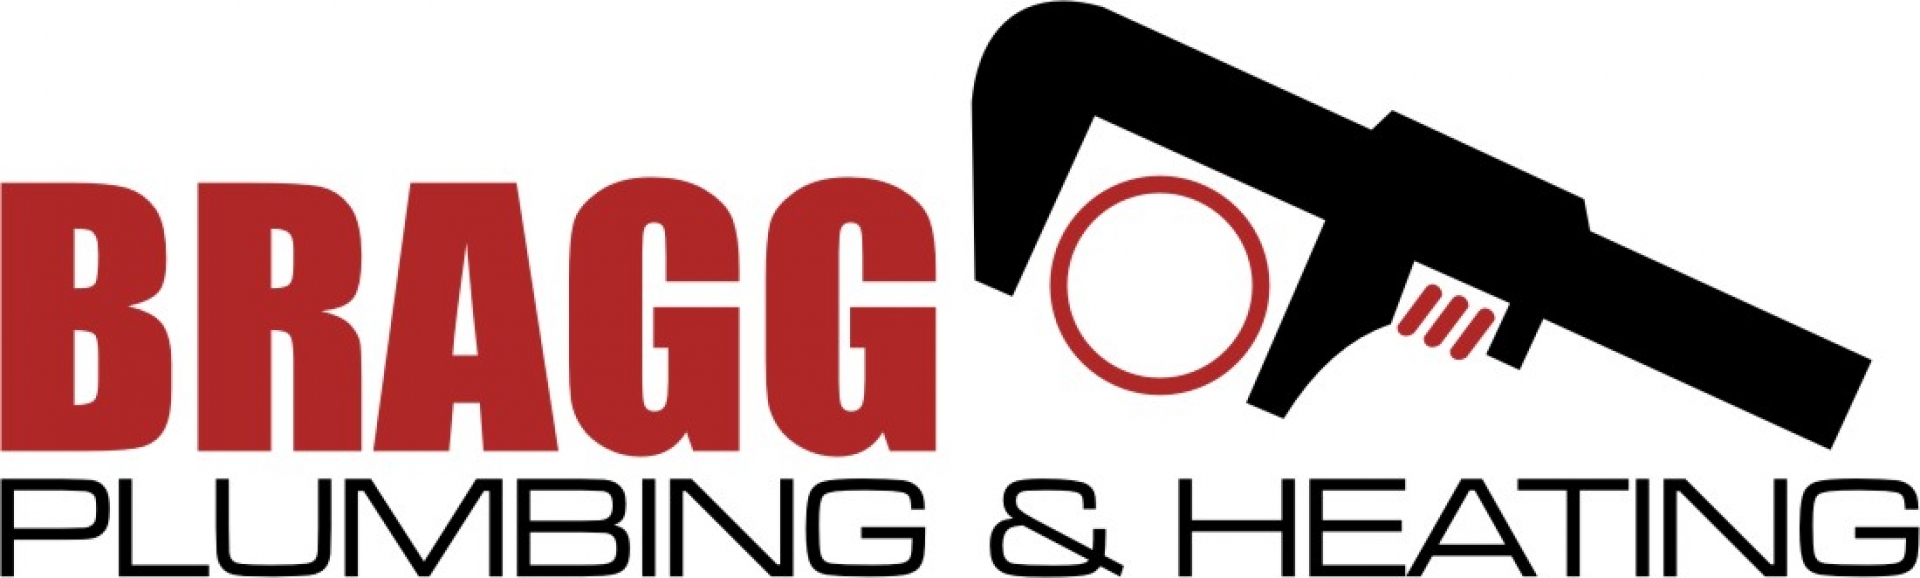 Bragg Plumbing & Heating company logo